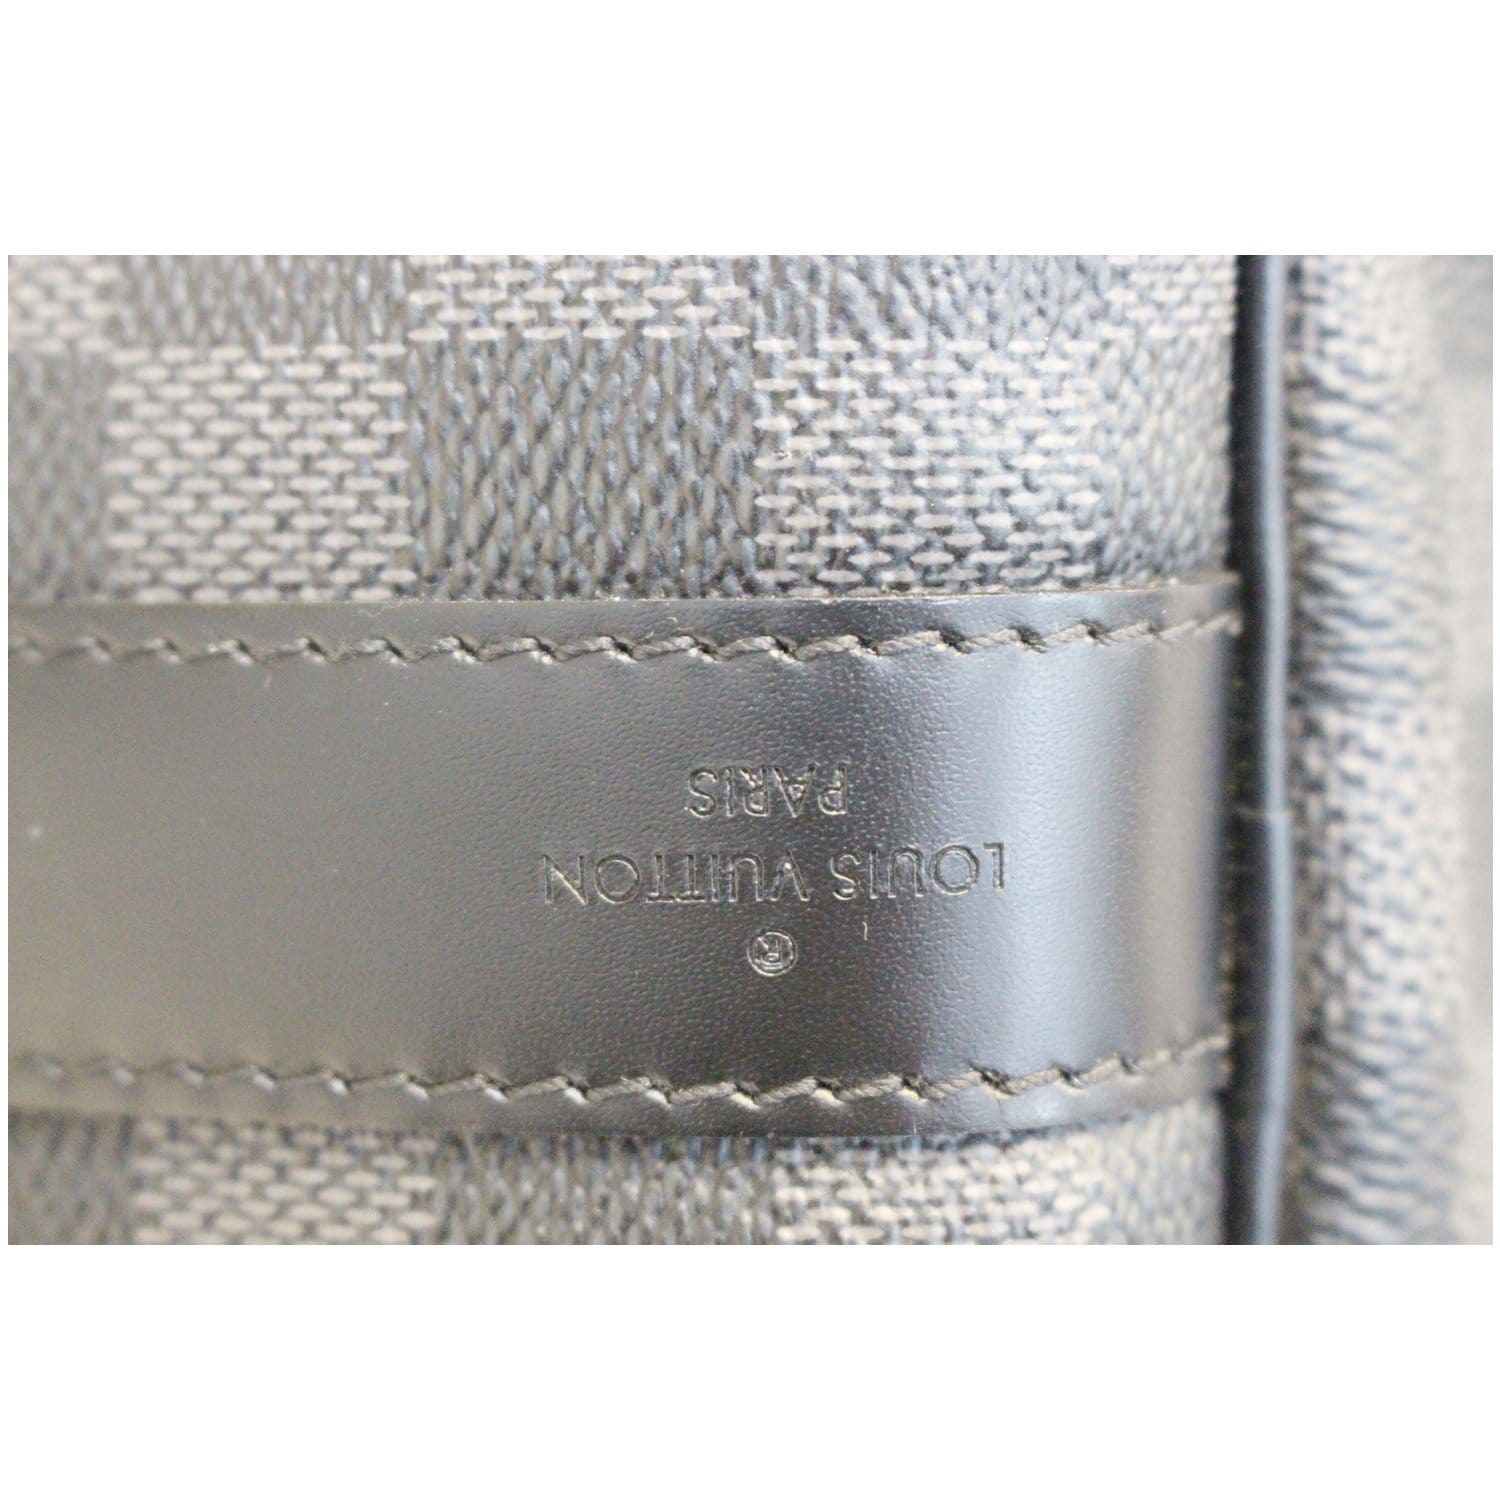 Louis Vuitton Keepall Travel bag 359290